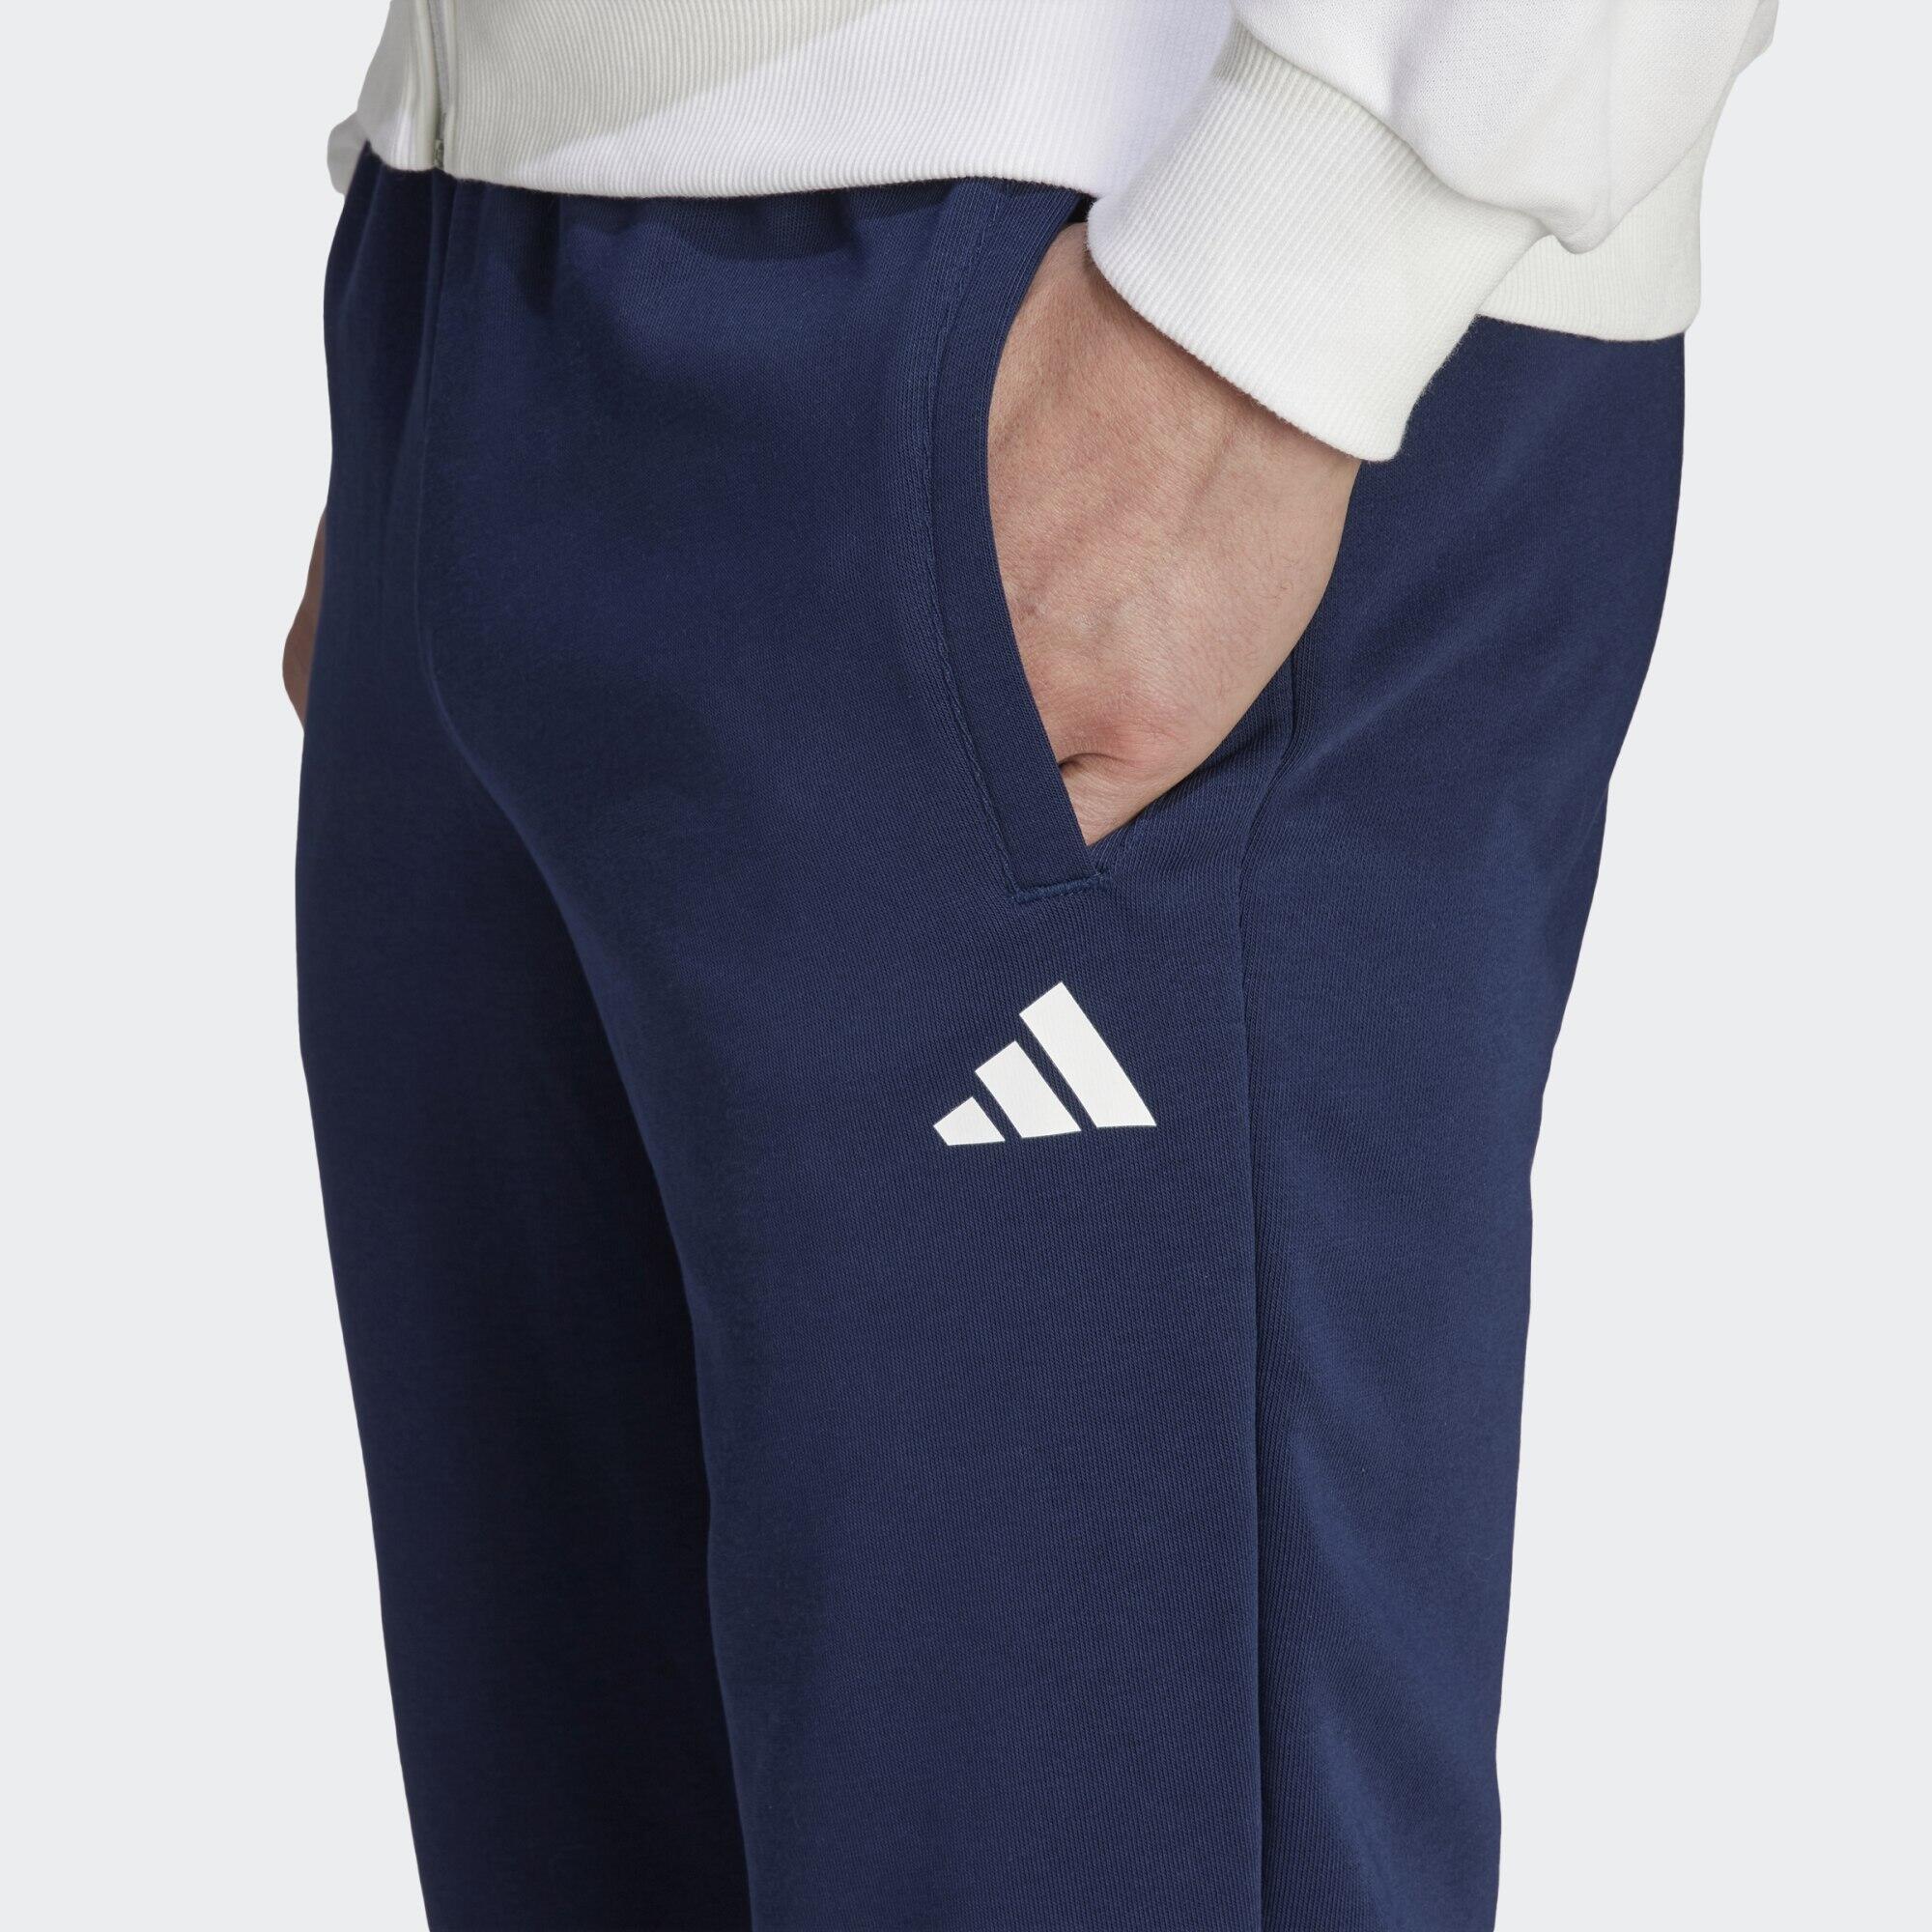 Club Teamwear Graphic Tennis Pants 5/5